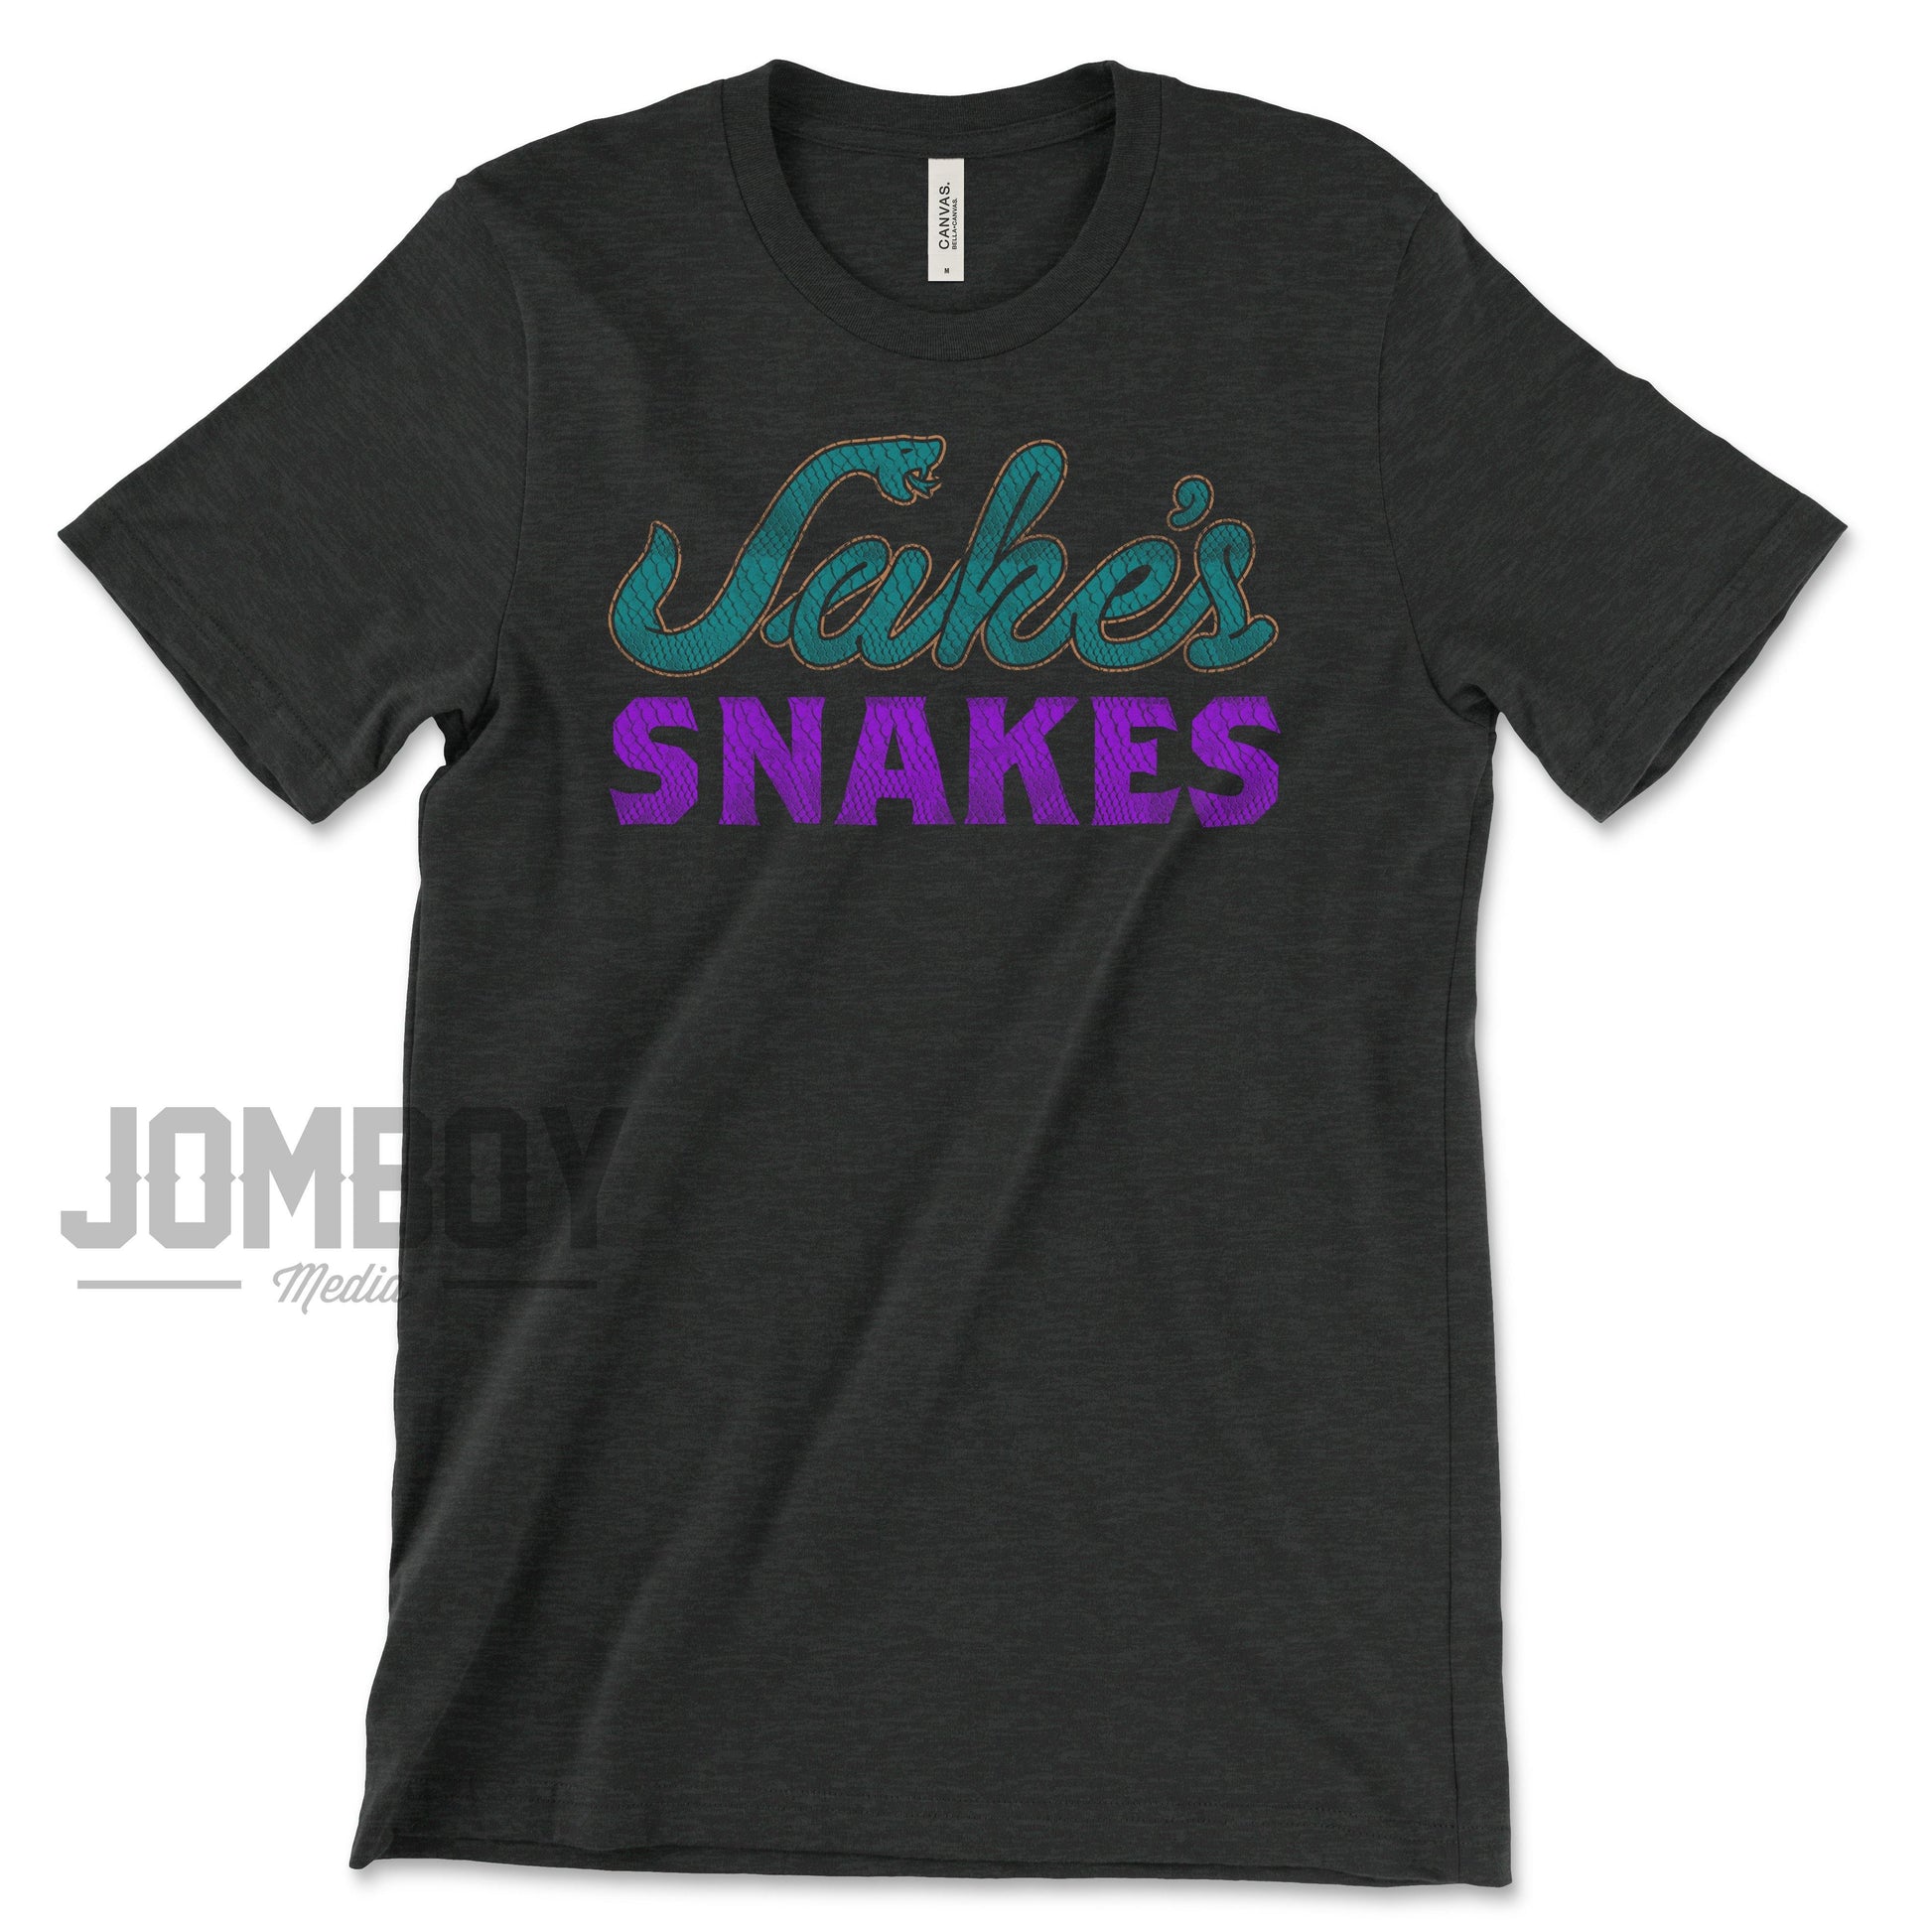 Jake's Snakes | T-Shirt - Jomboy Media